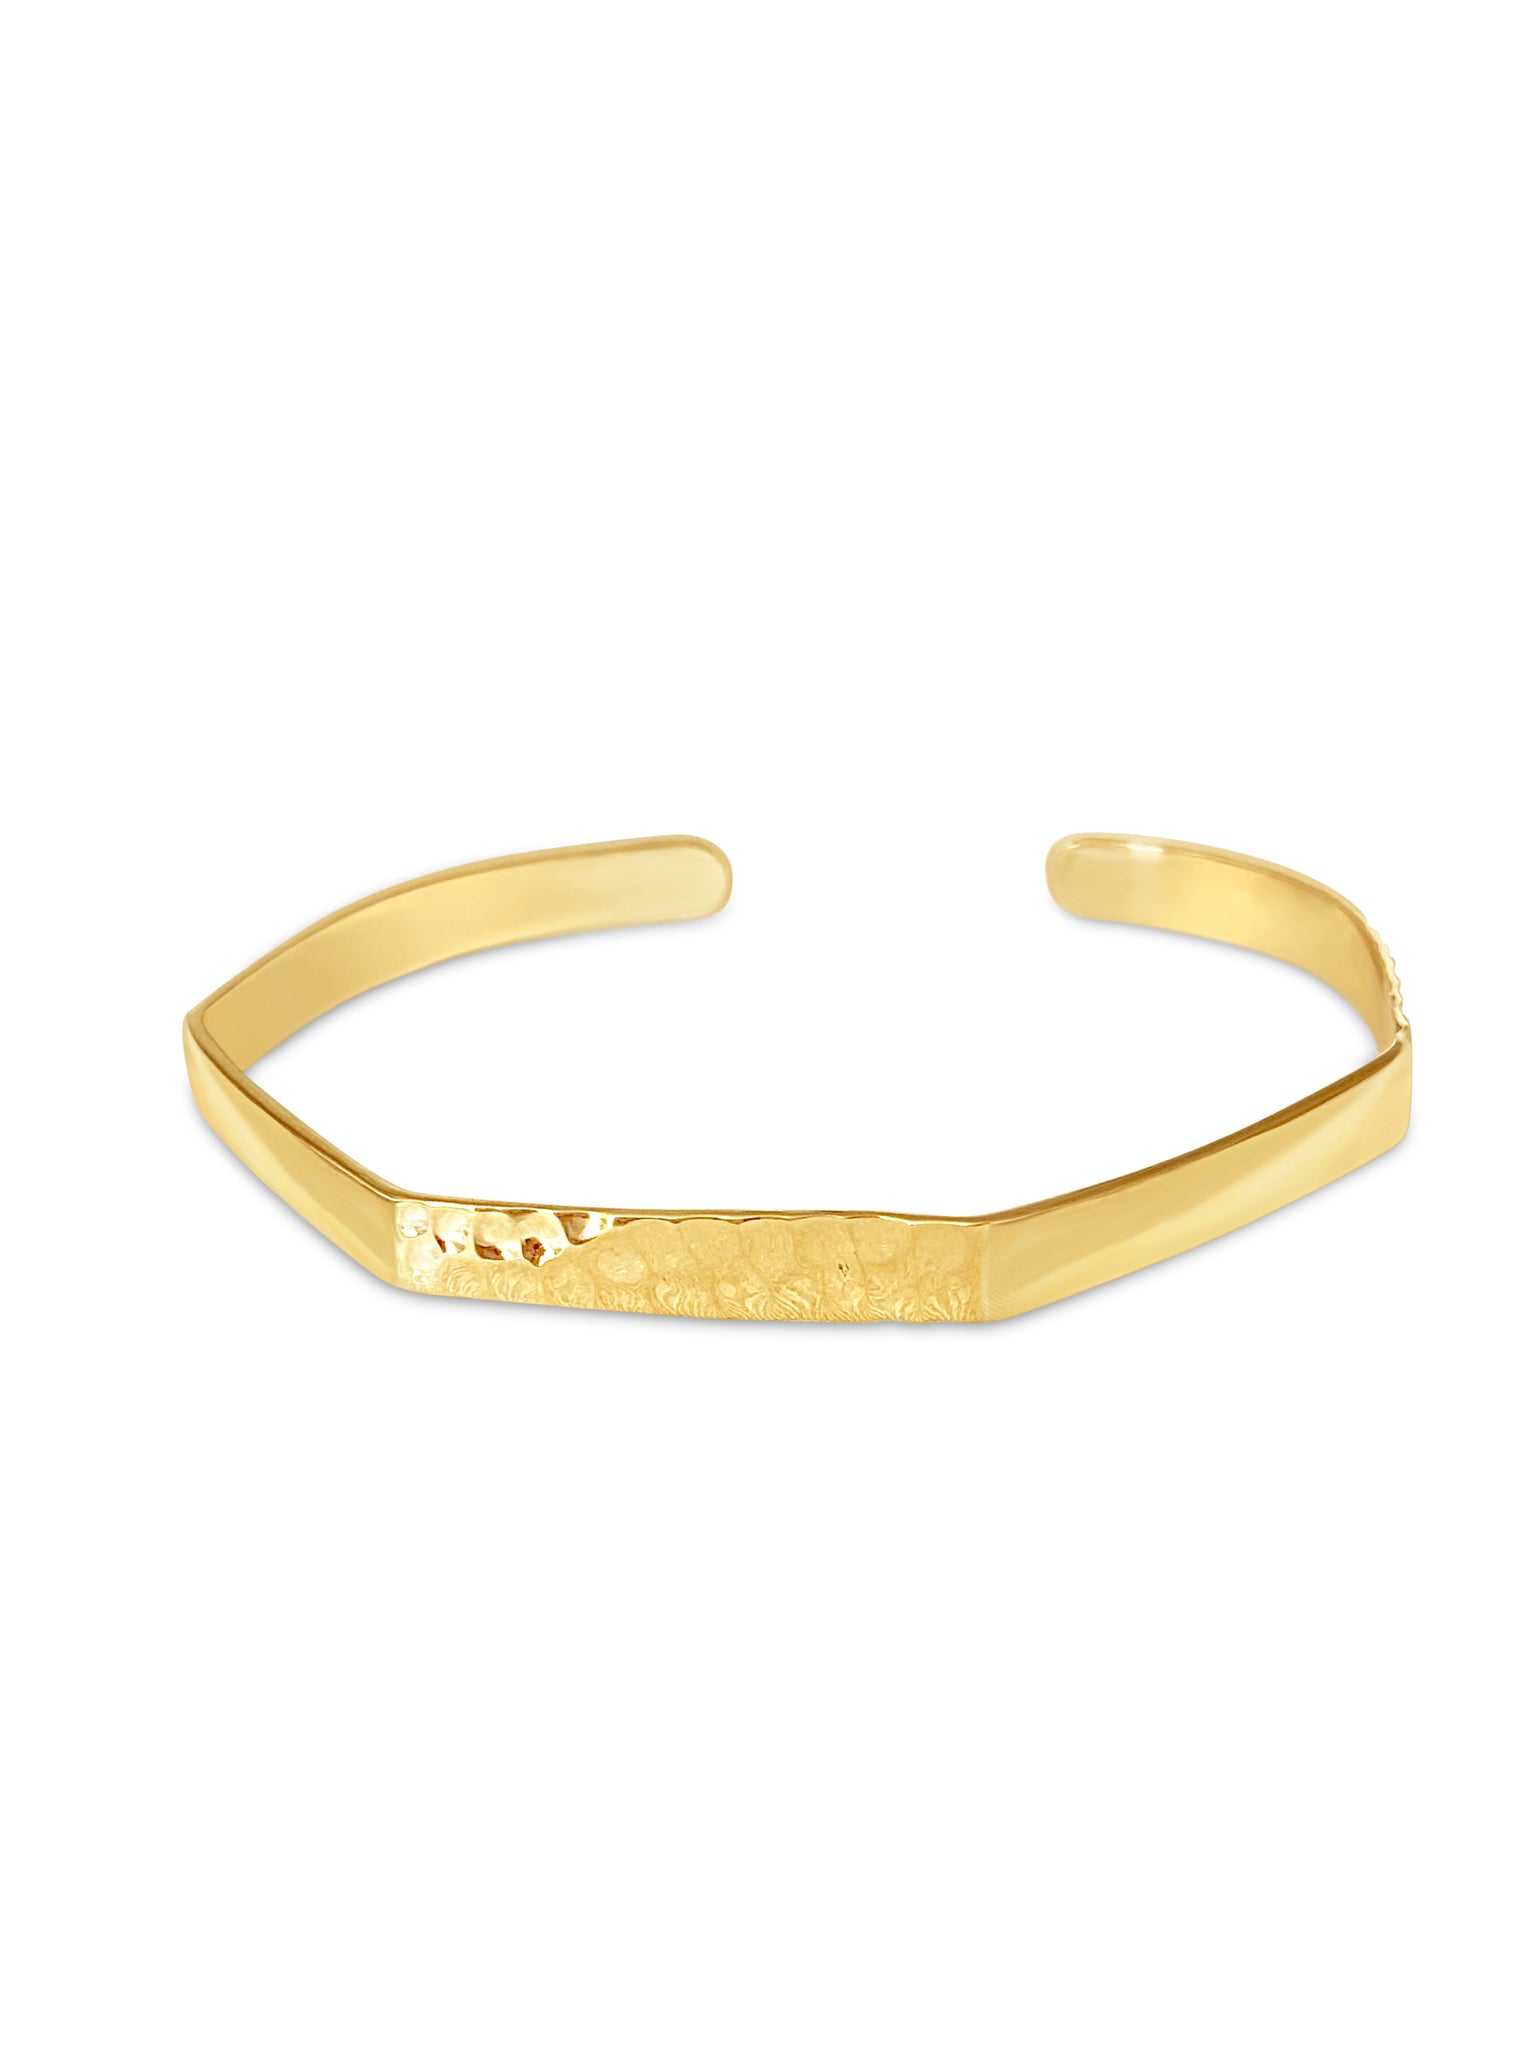 ASOS DESIGN 14k gold plate cuff bracelet with ball and bar design | ASOS